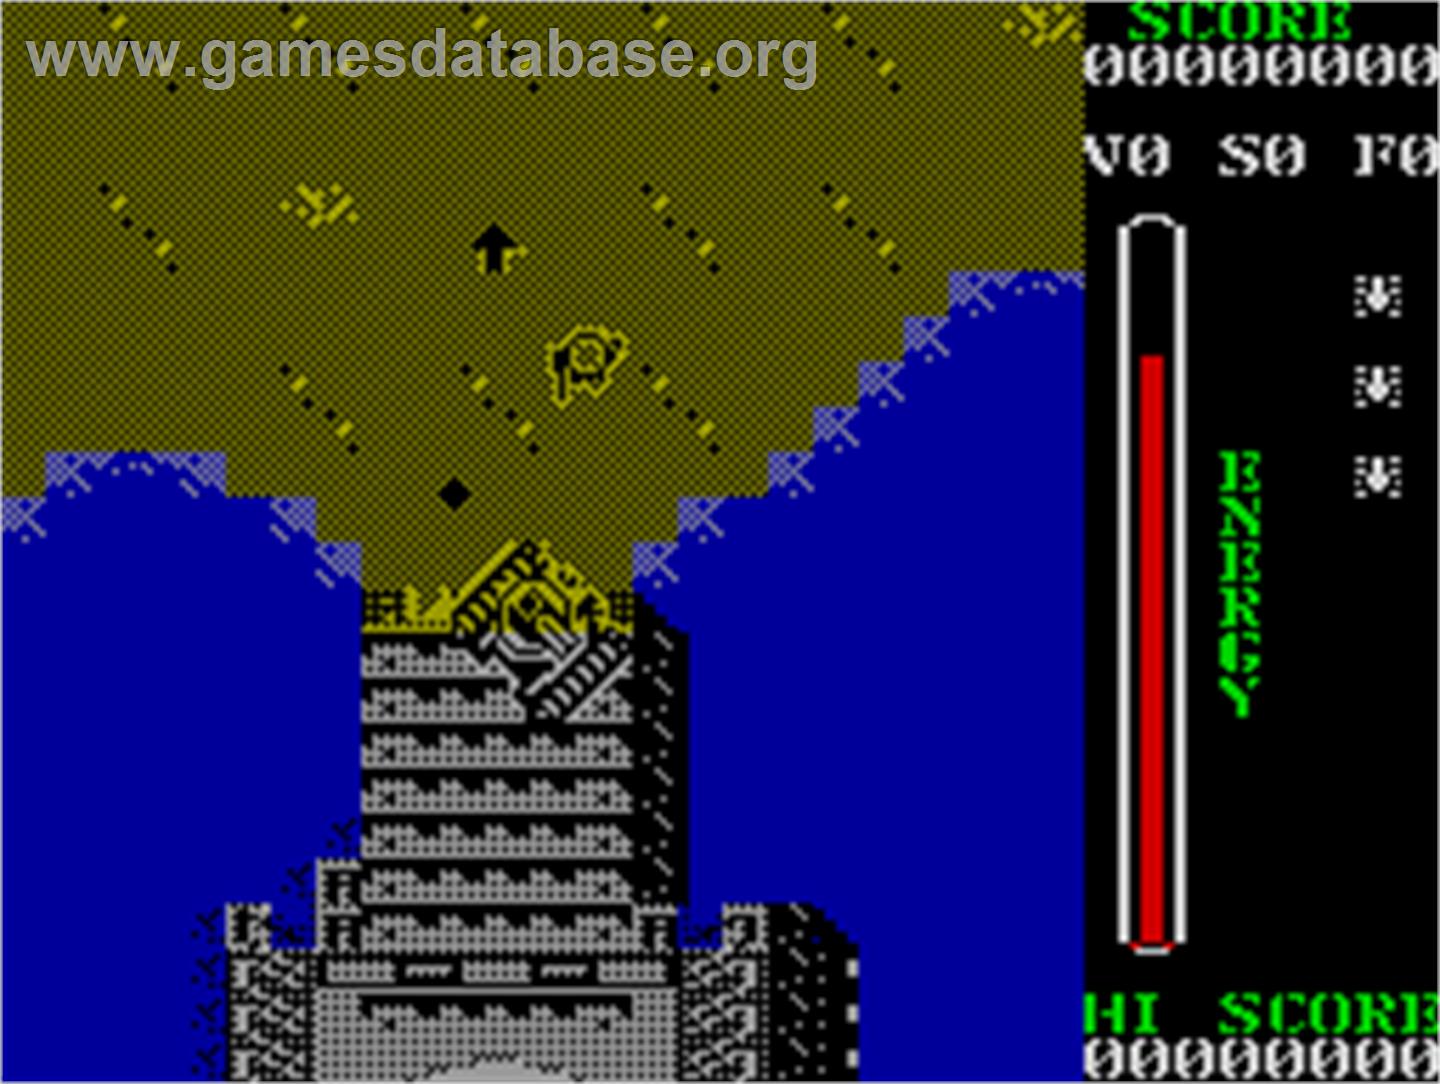 Dixons' Premier Collection - Sinclair ZX Spectrum - Artwork - In Game